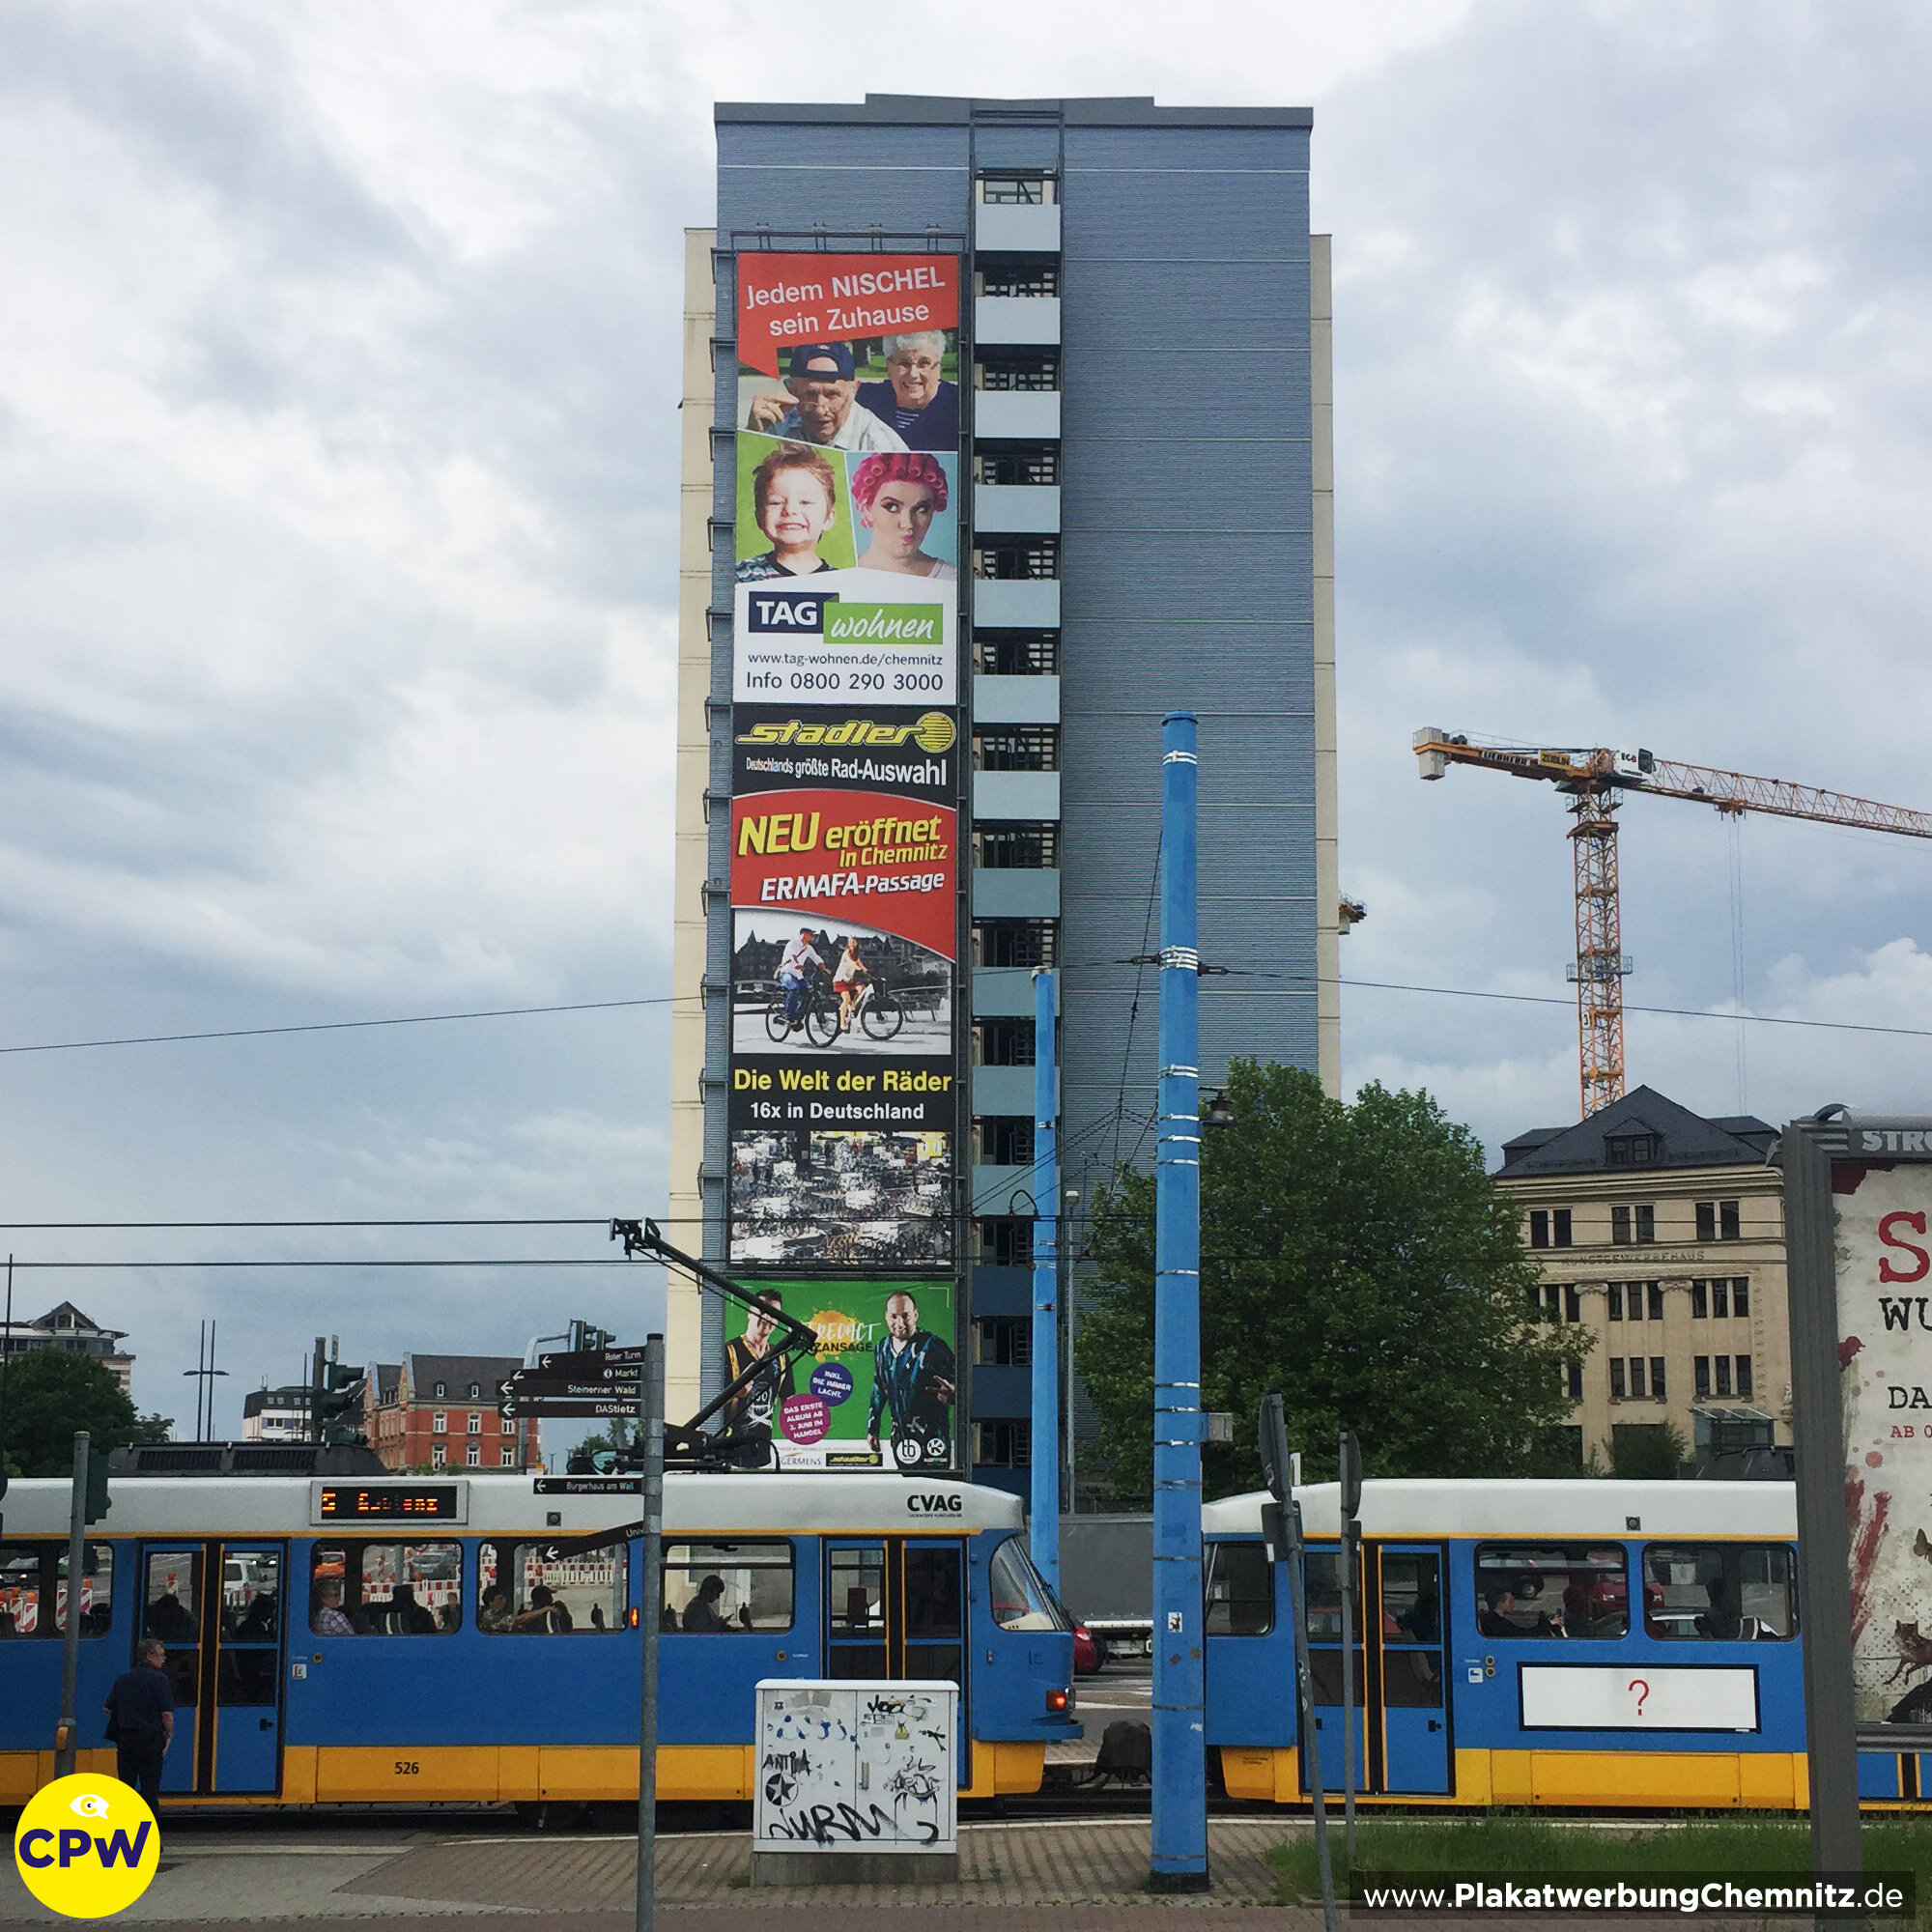 PWC Plakatwerbung Chemnitz - TAG Immobilien AG und Stadler Fahrrad